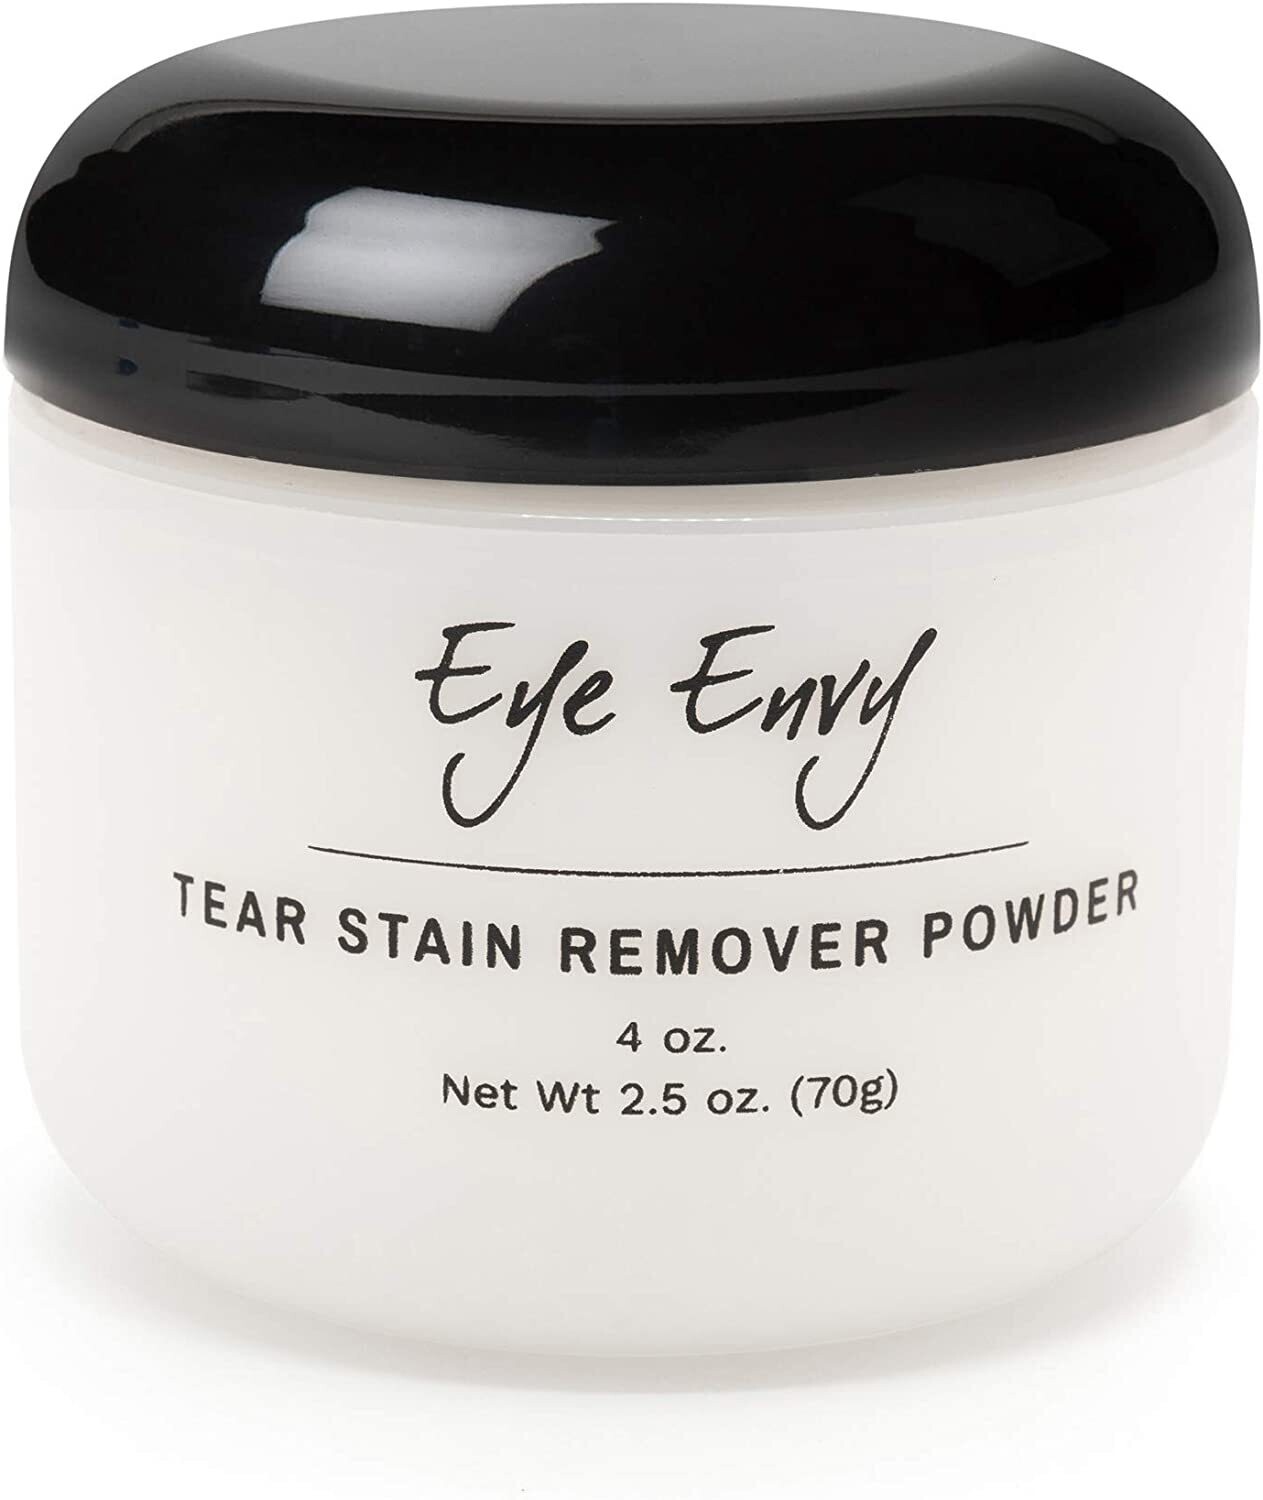 Eye Envy Tear Stain Remover Powder 4oz